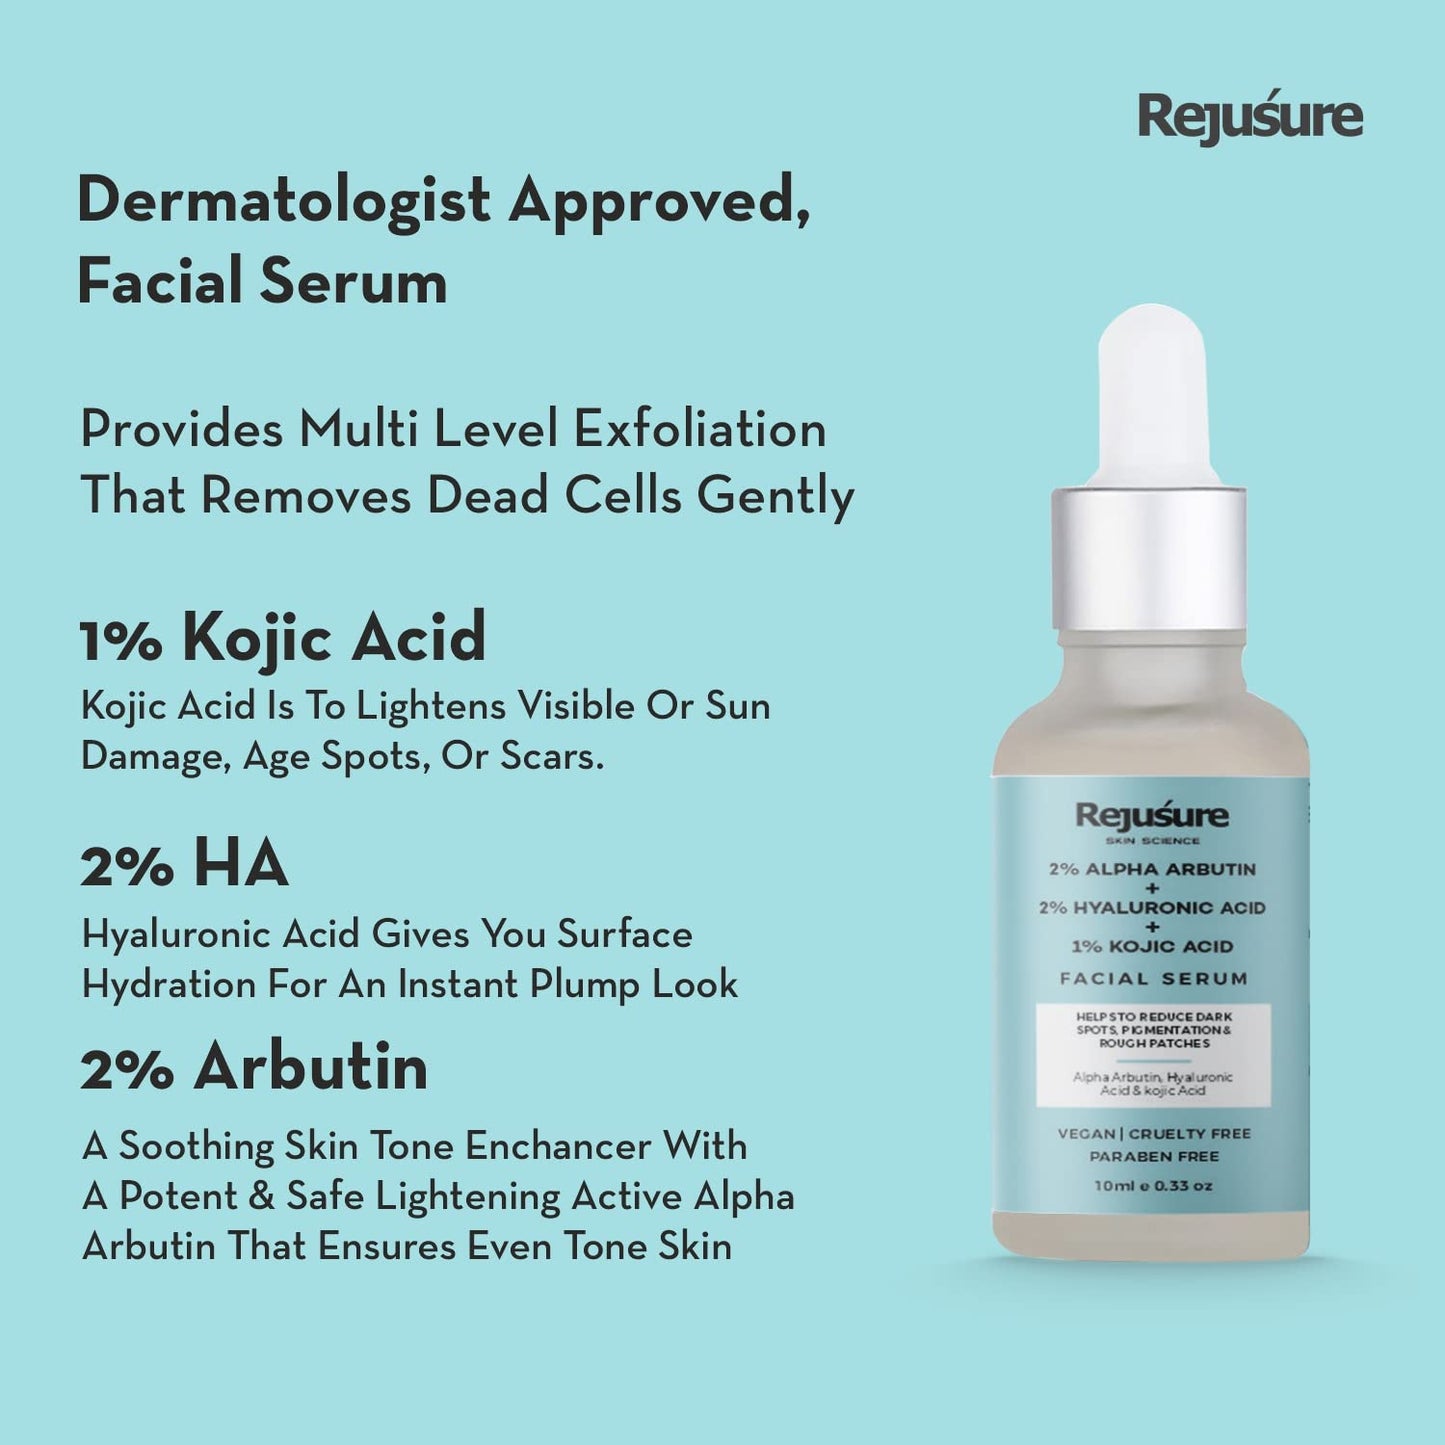 Rejusure 2 Alpha Arbutin  2 Hyaluronic Acid  1 Kojic Acid Face Serum - Dark Spot Correction Hydration Radiance Hyperpigmentation Blemishes Skin Texture  radiamce  For Men  Women